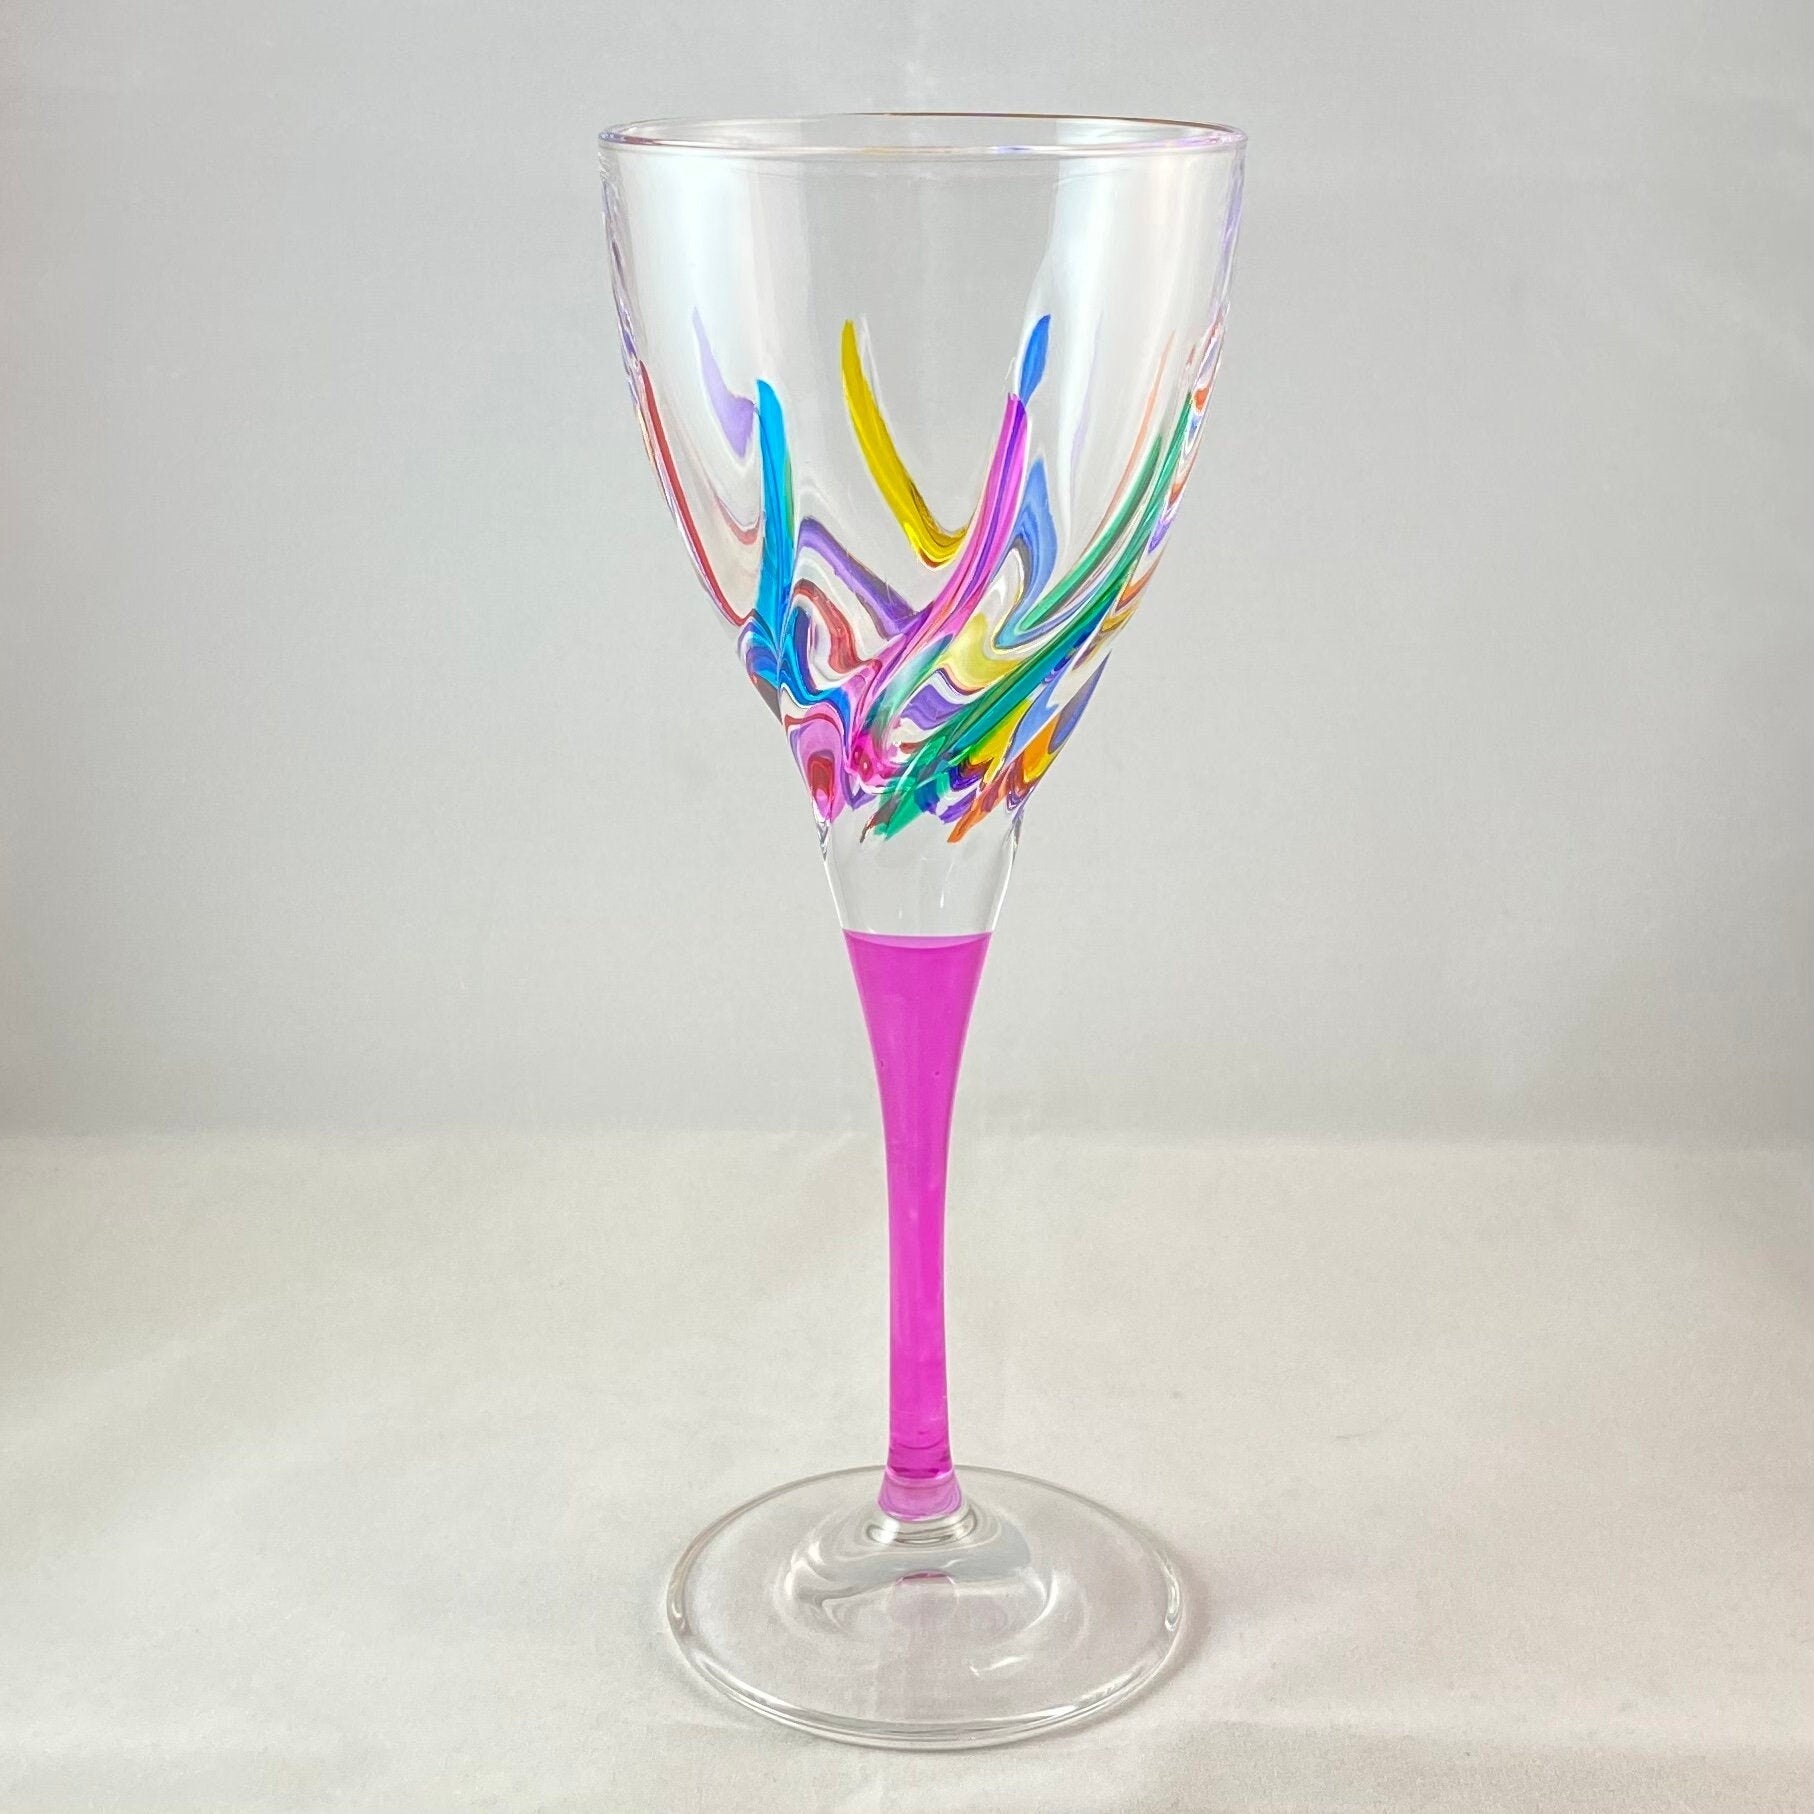 Pink Stem Venetian Glass Wine Glass - Handmade in Italy, Colorful Murano Glass